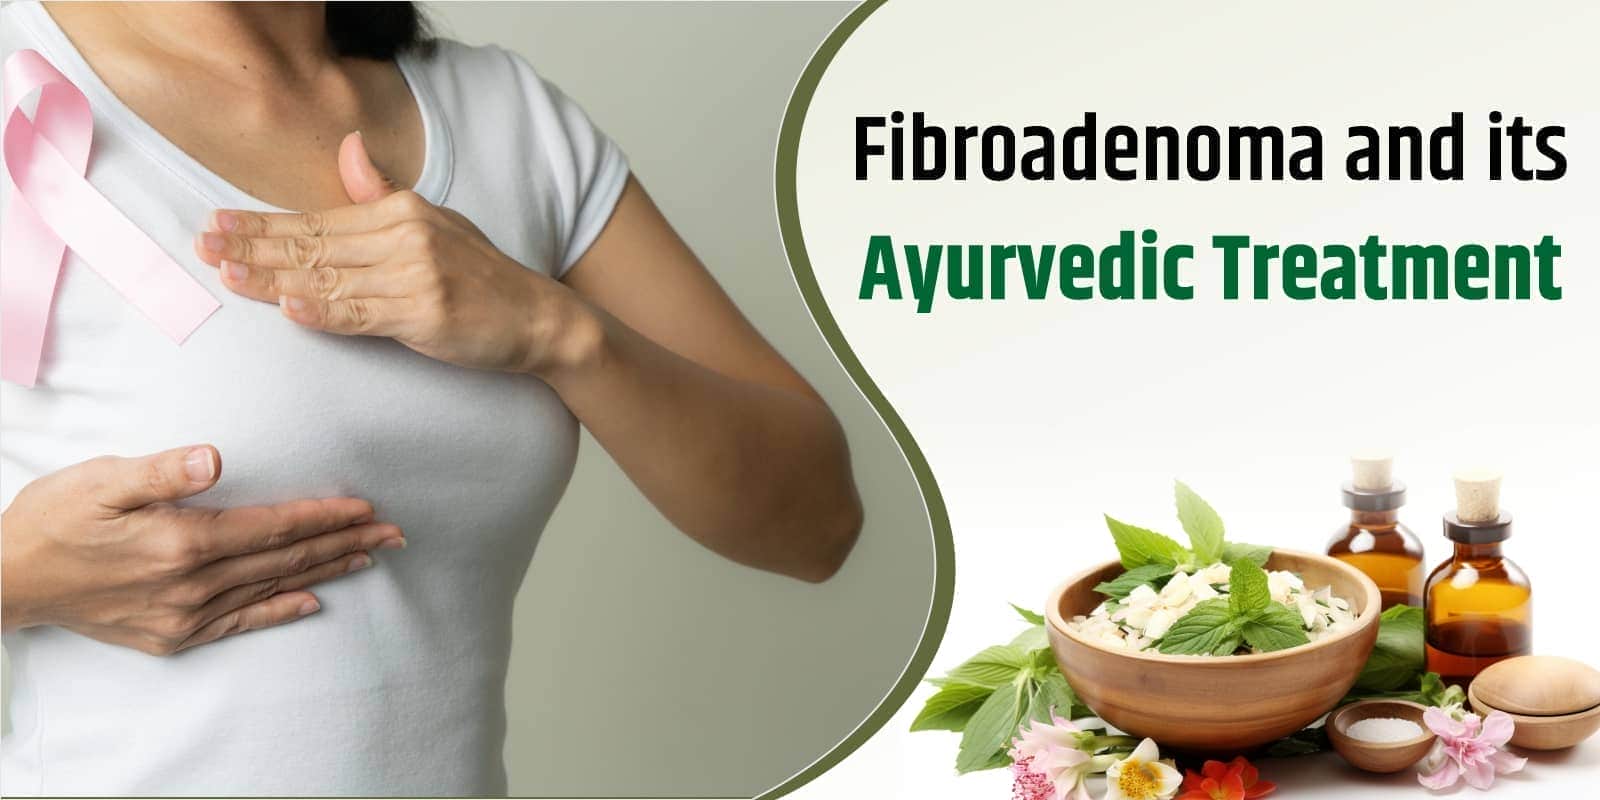 Fibroadenoma and its Ayurvedic Treatment